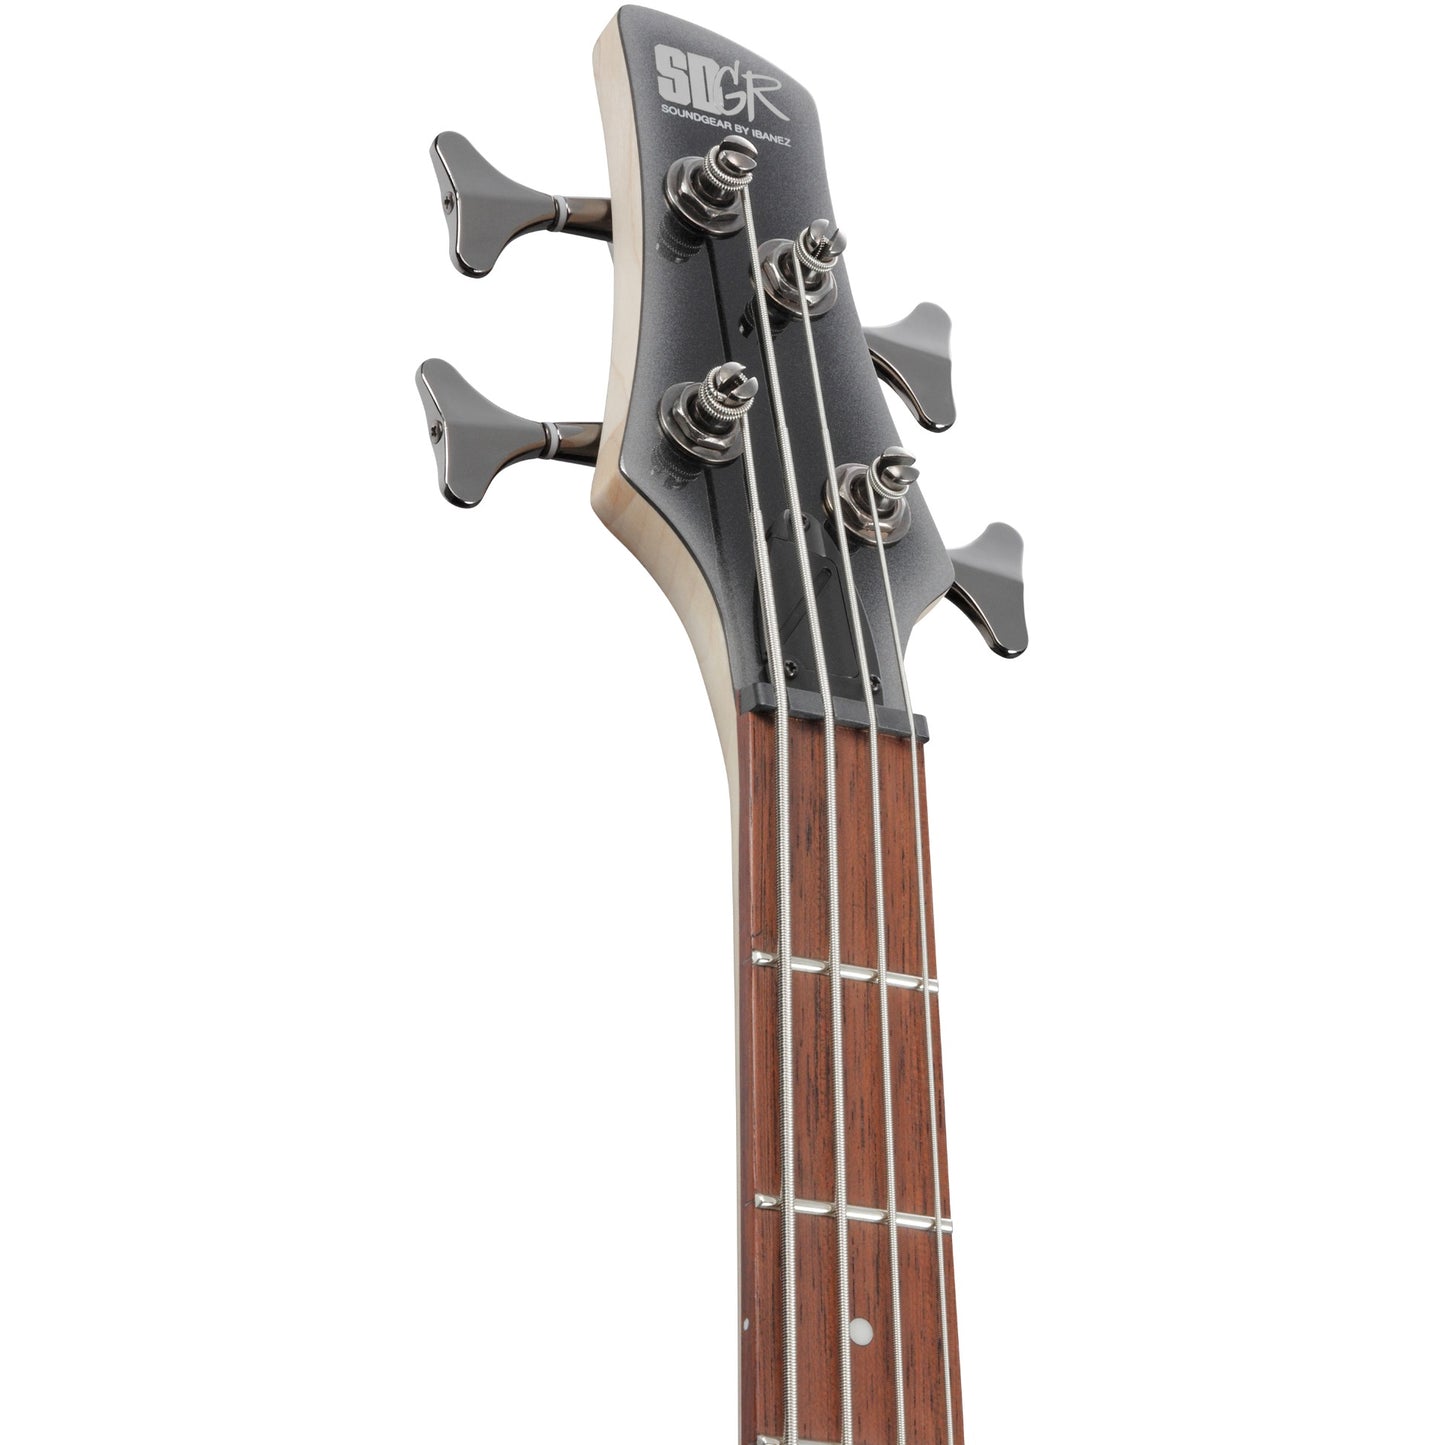 Ibanez SR Standard 4-String Electric Bass in Midnight Gray Burst